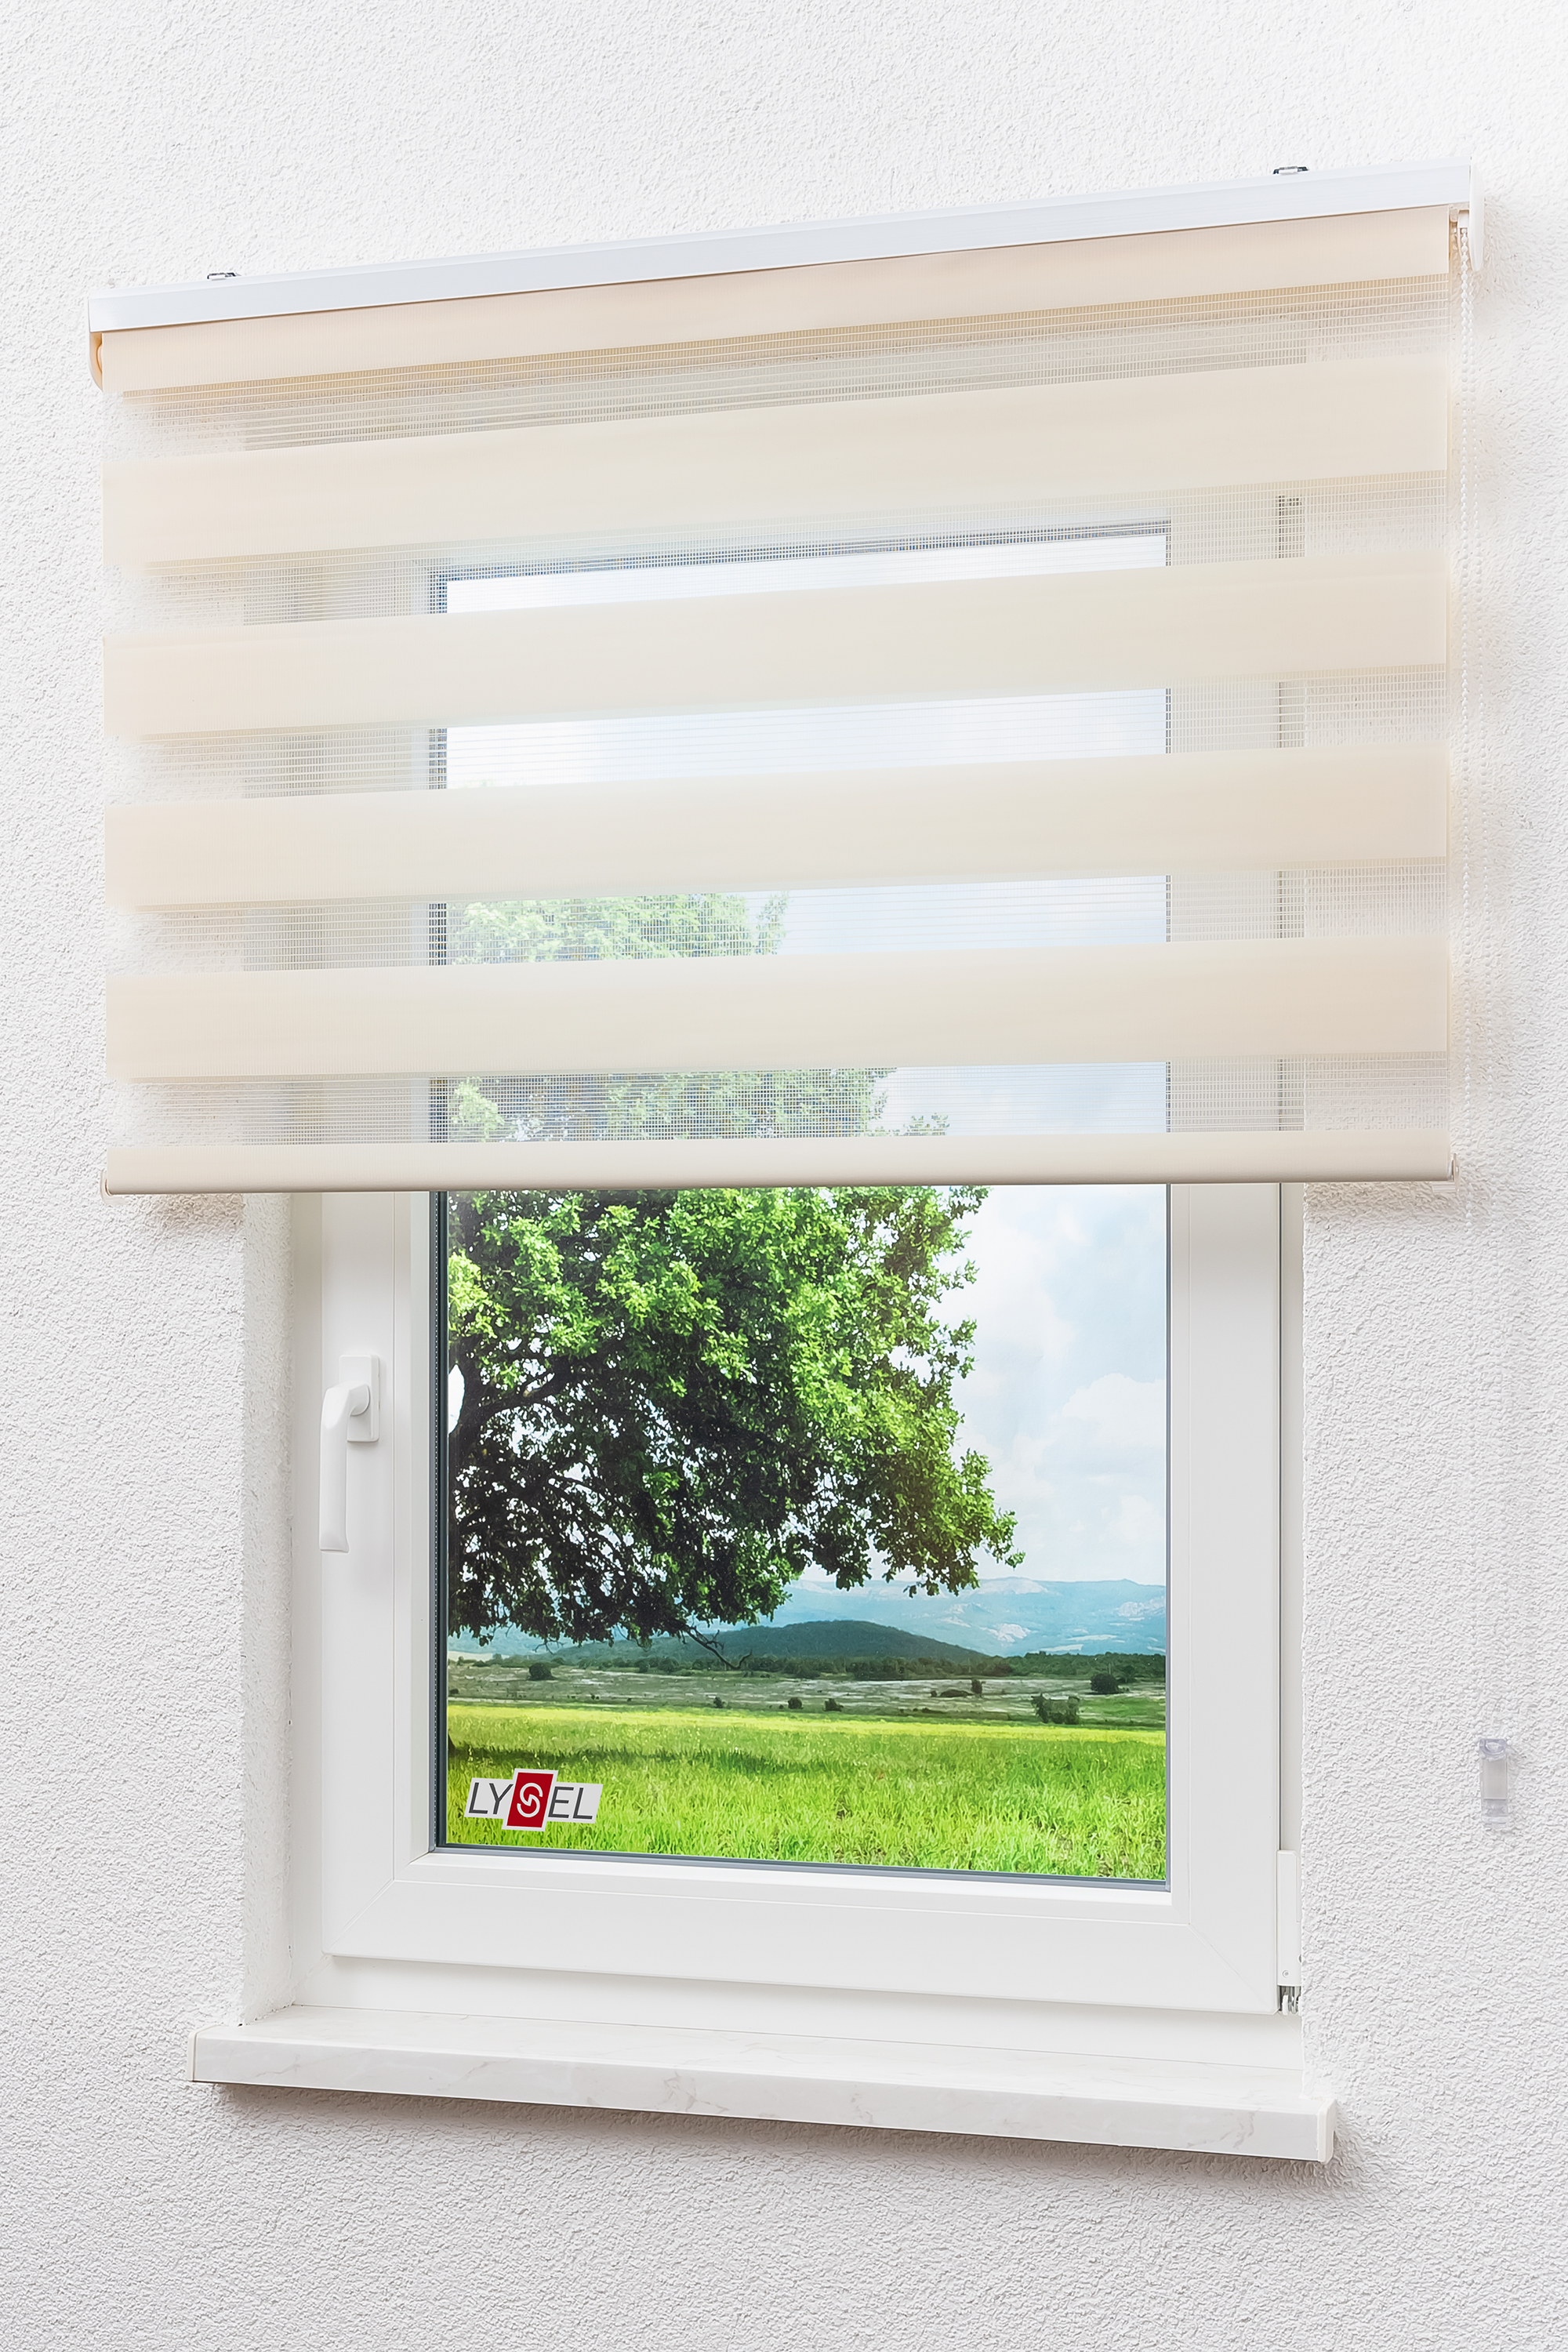 Duo Rollo Doppelrollo Solid mit Blende blickdicht Fenster Tür Lysel Outlet  | eBay